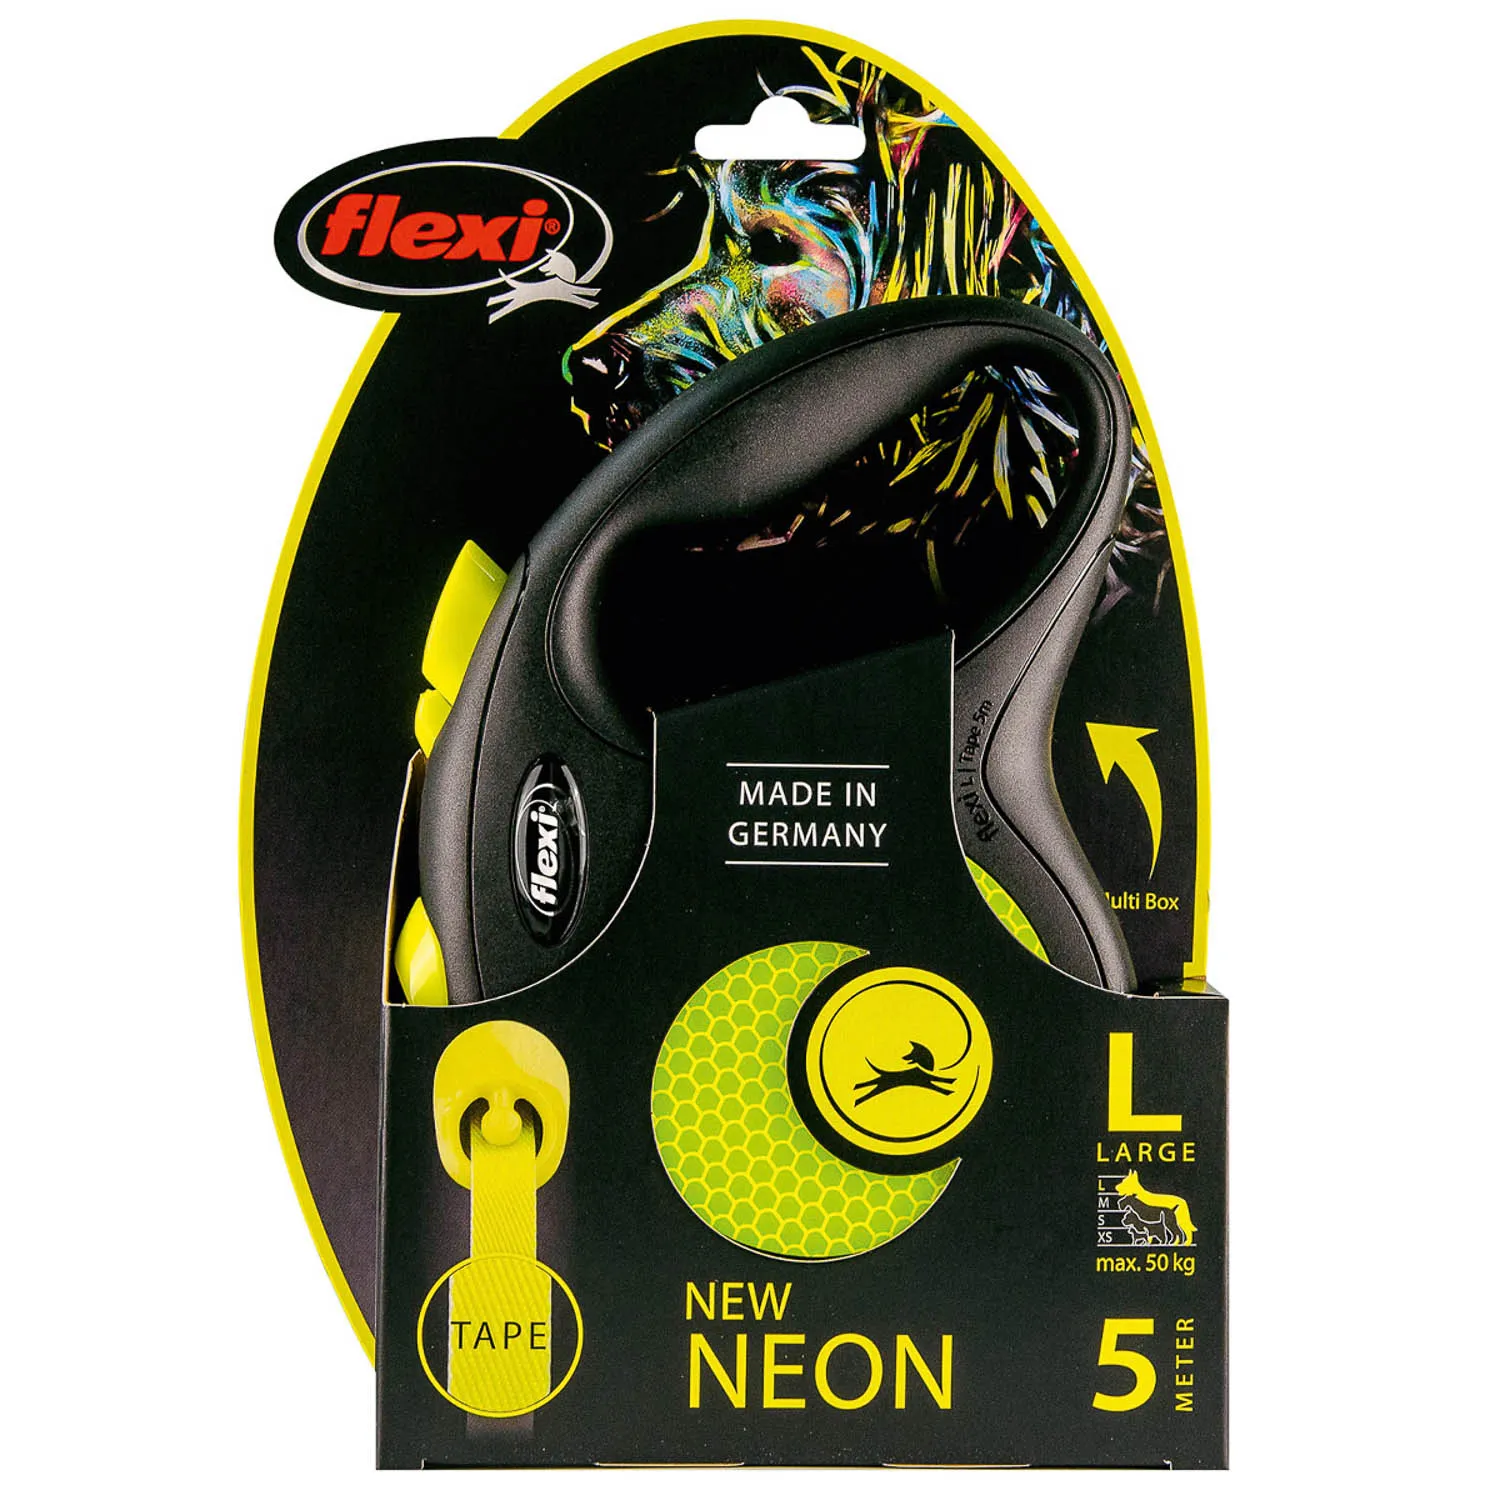 flexi рулетка Neon New L (до 50 кг) лента 5 м, светоотражающая, желтый неон